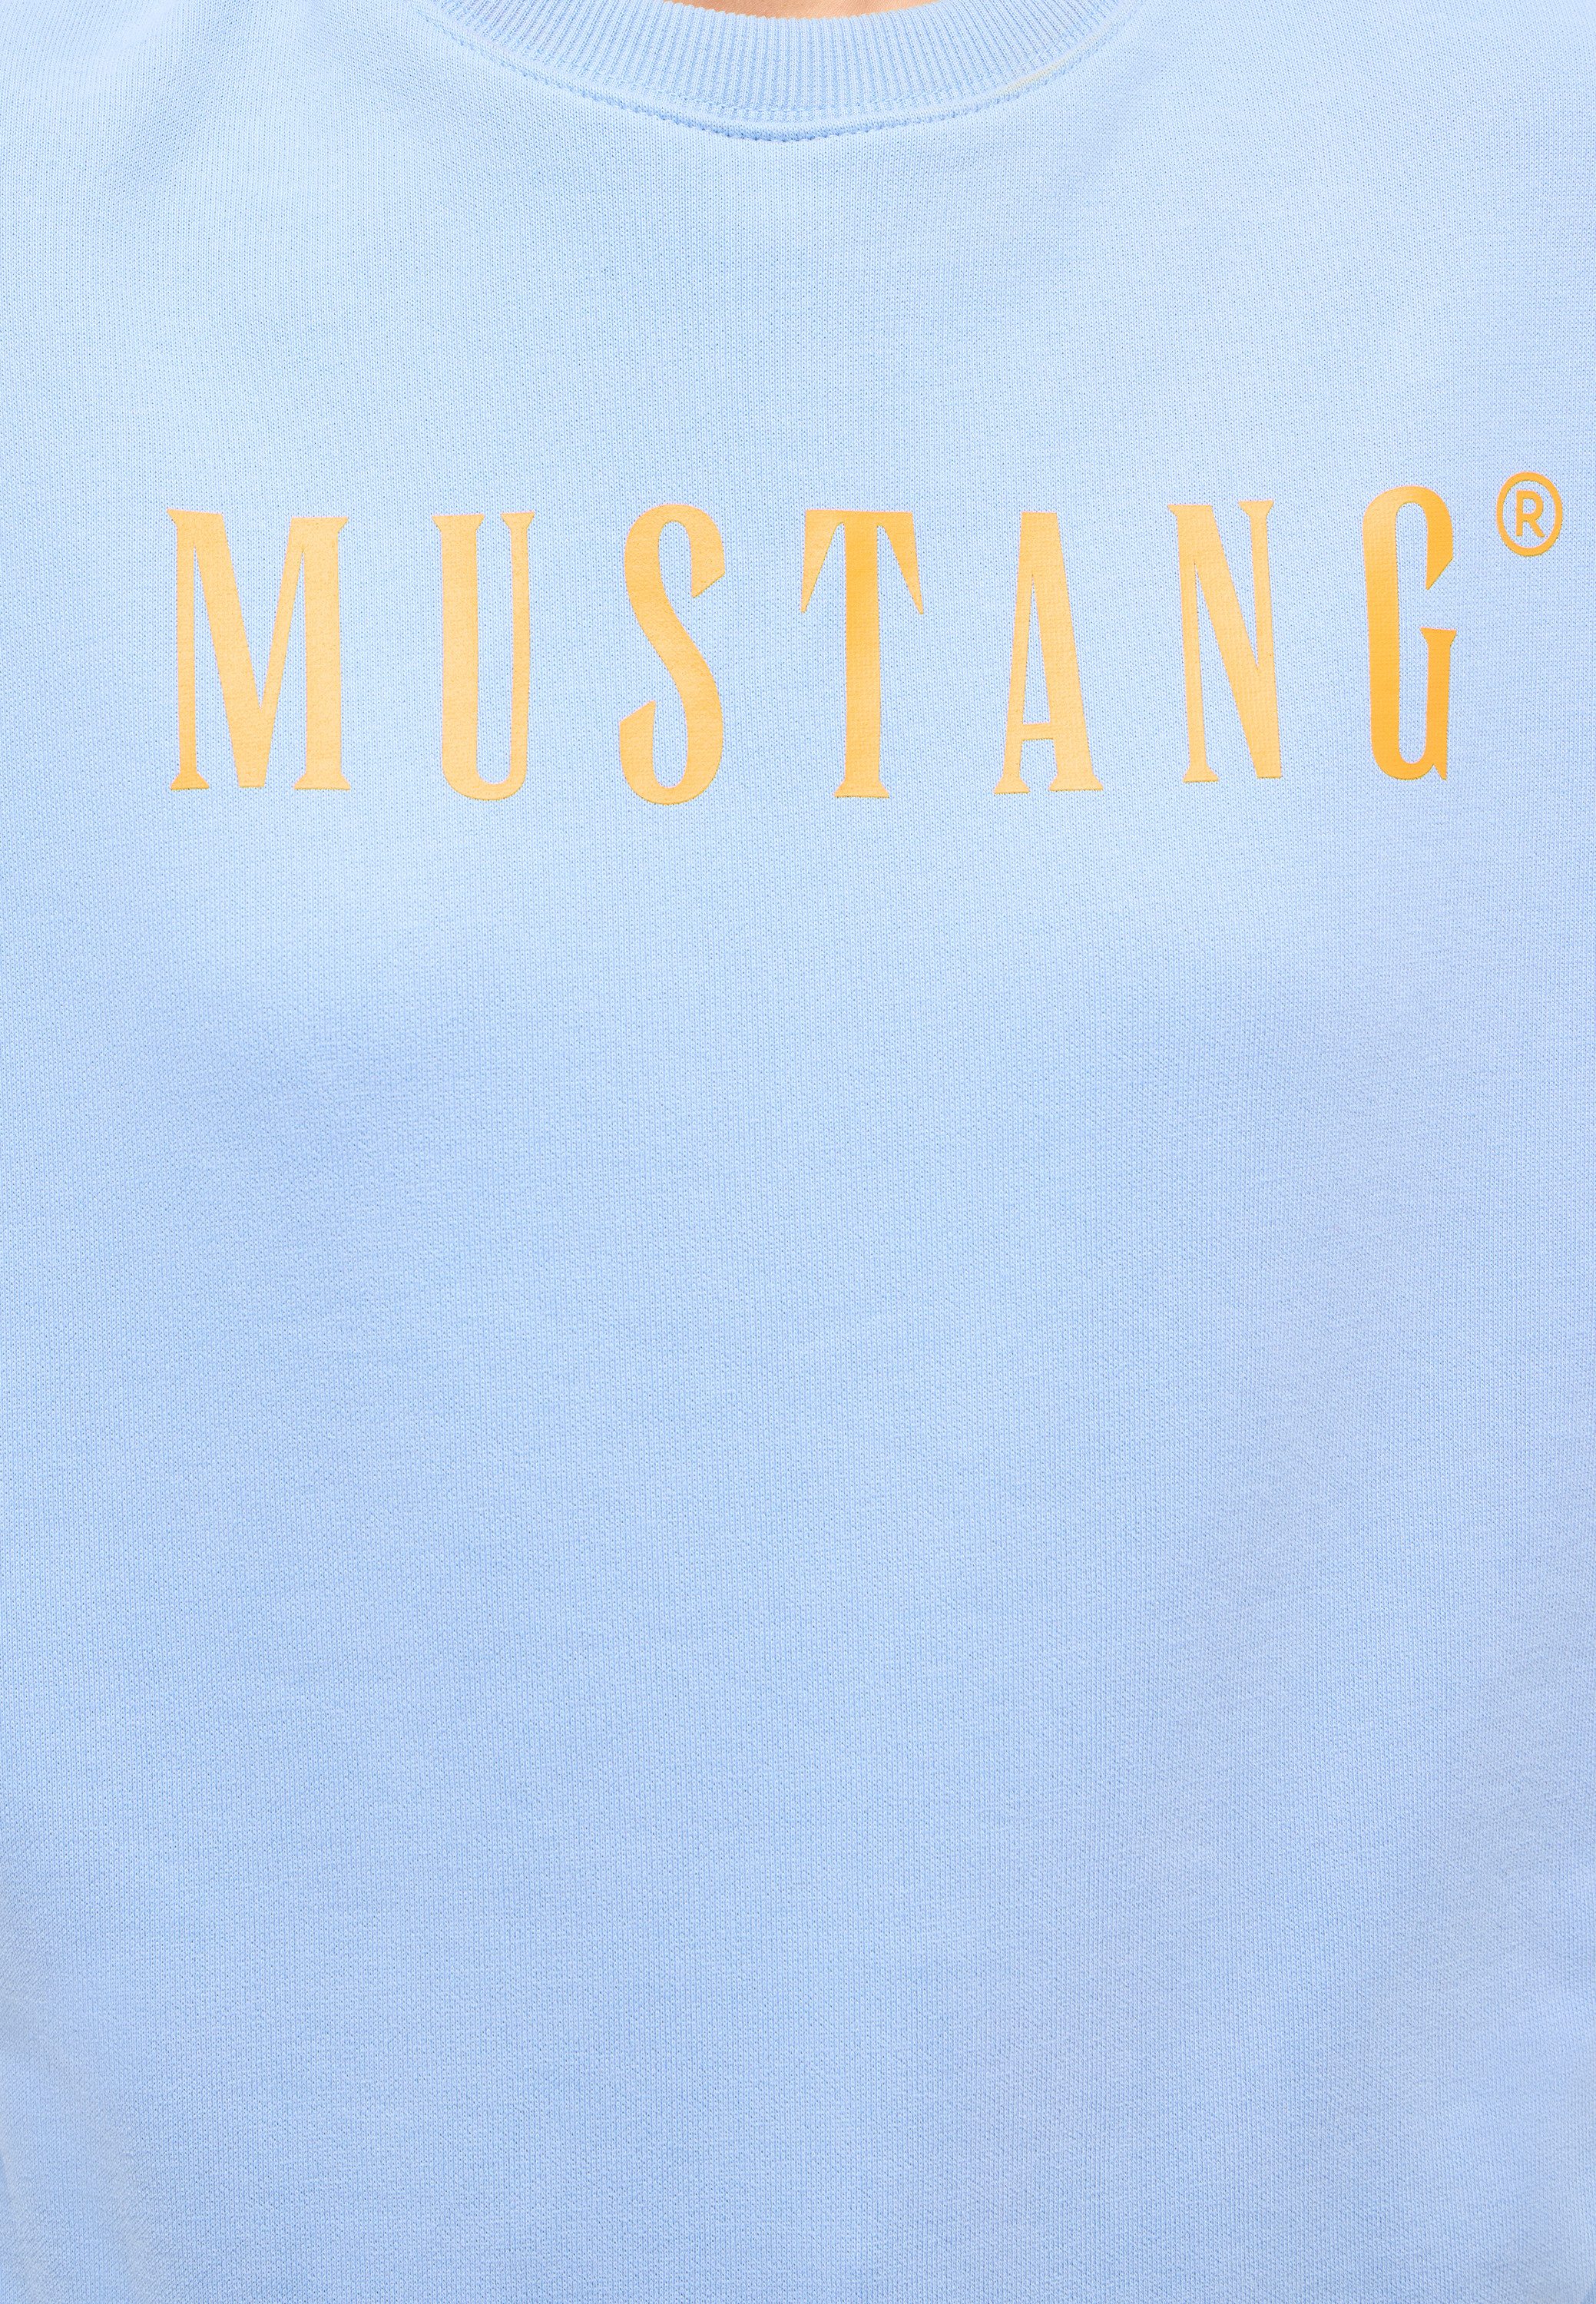 Mustang Sweatshirt